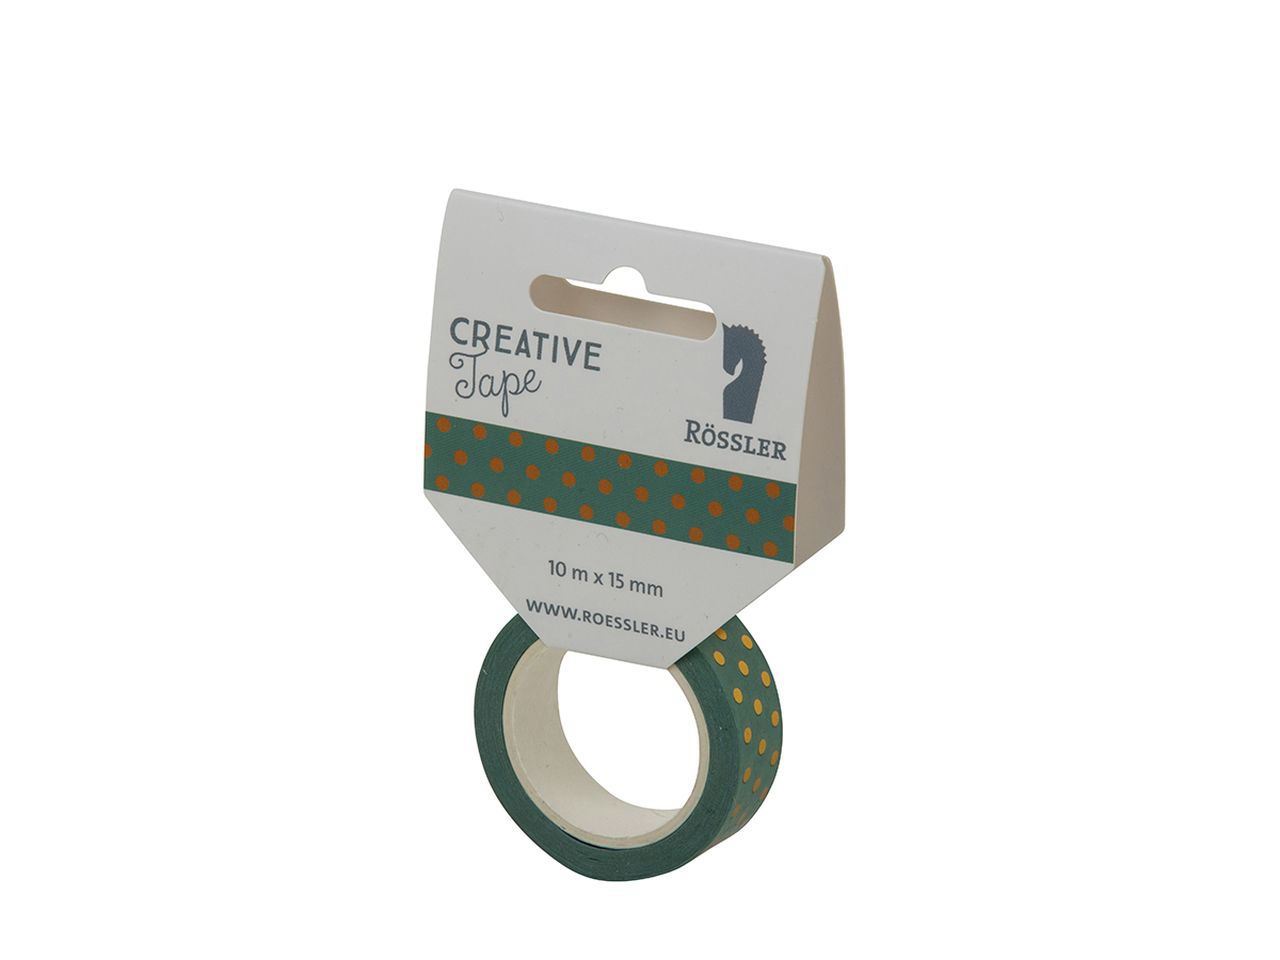 Creative Tape adesivo 10m x 15mm